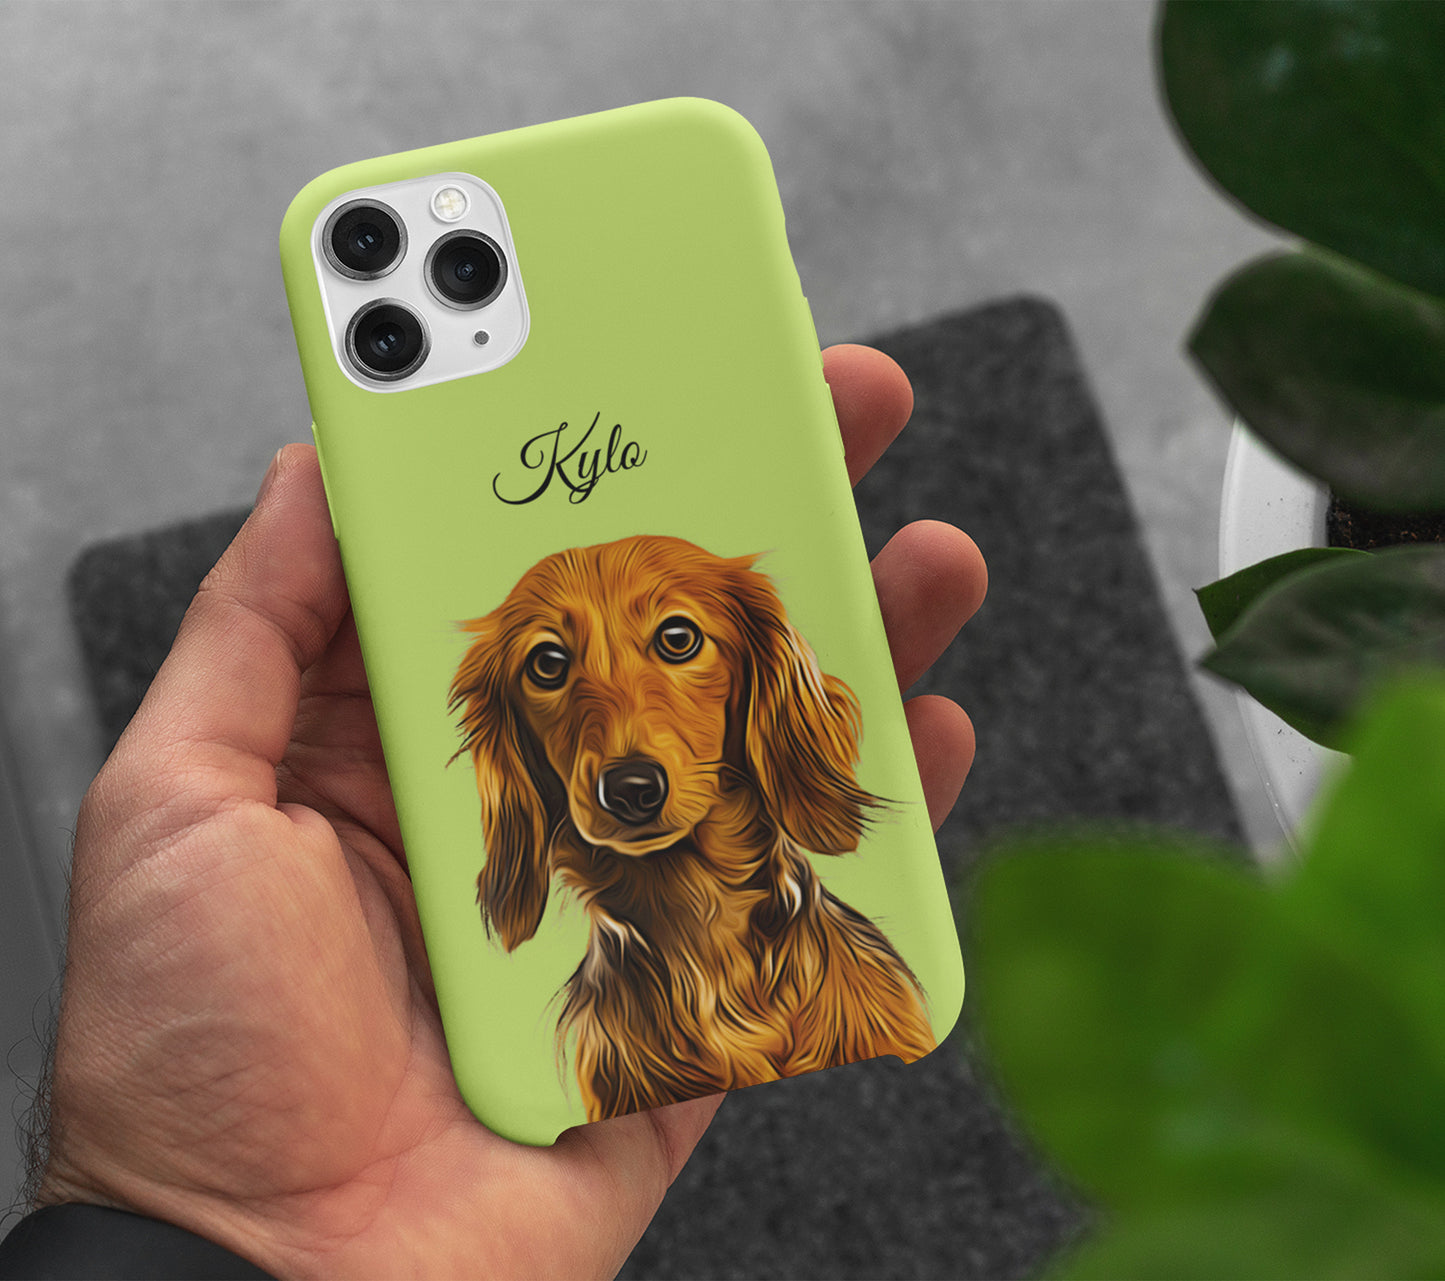 Personalized Dog Face Portrait Phone Case